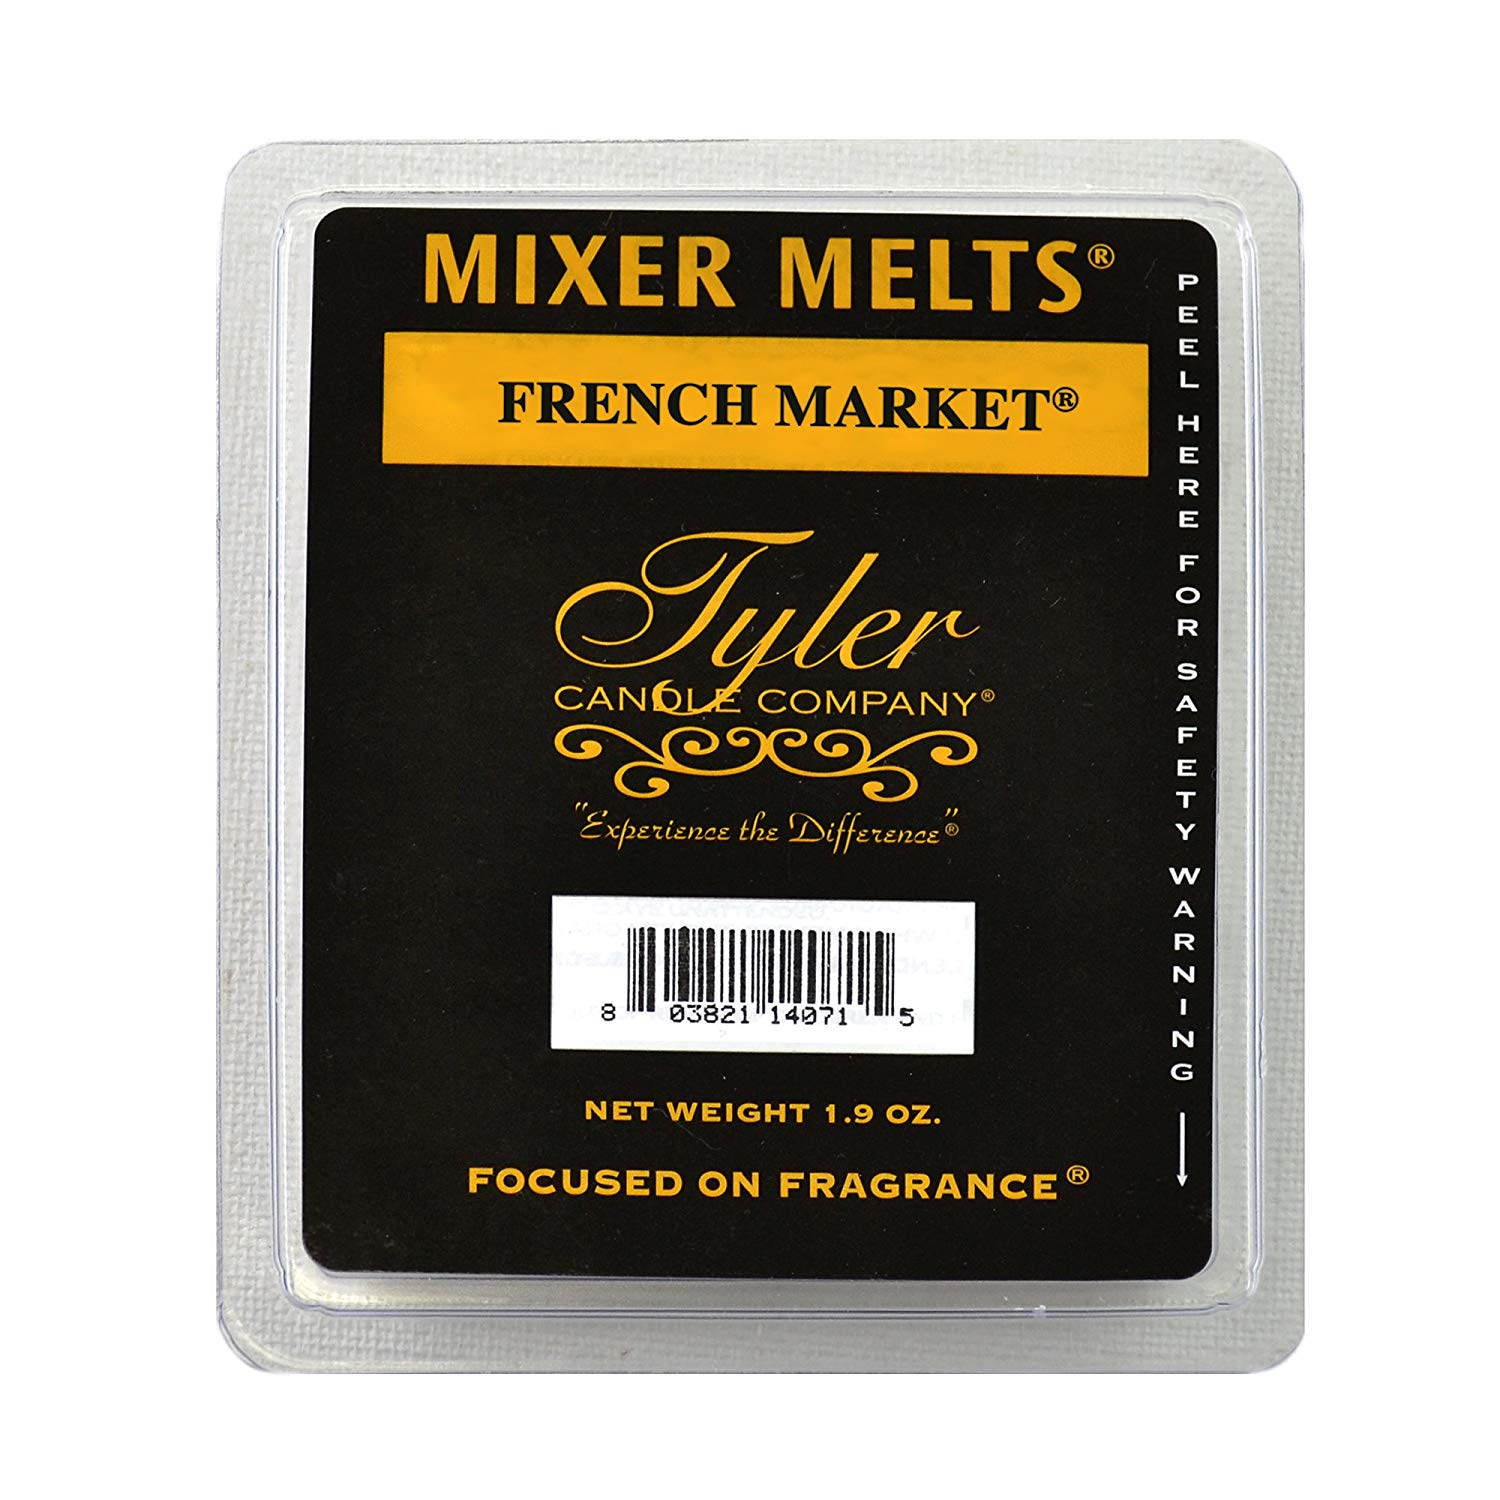 French Market Mixer Melts